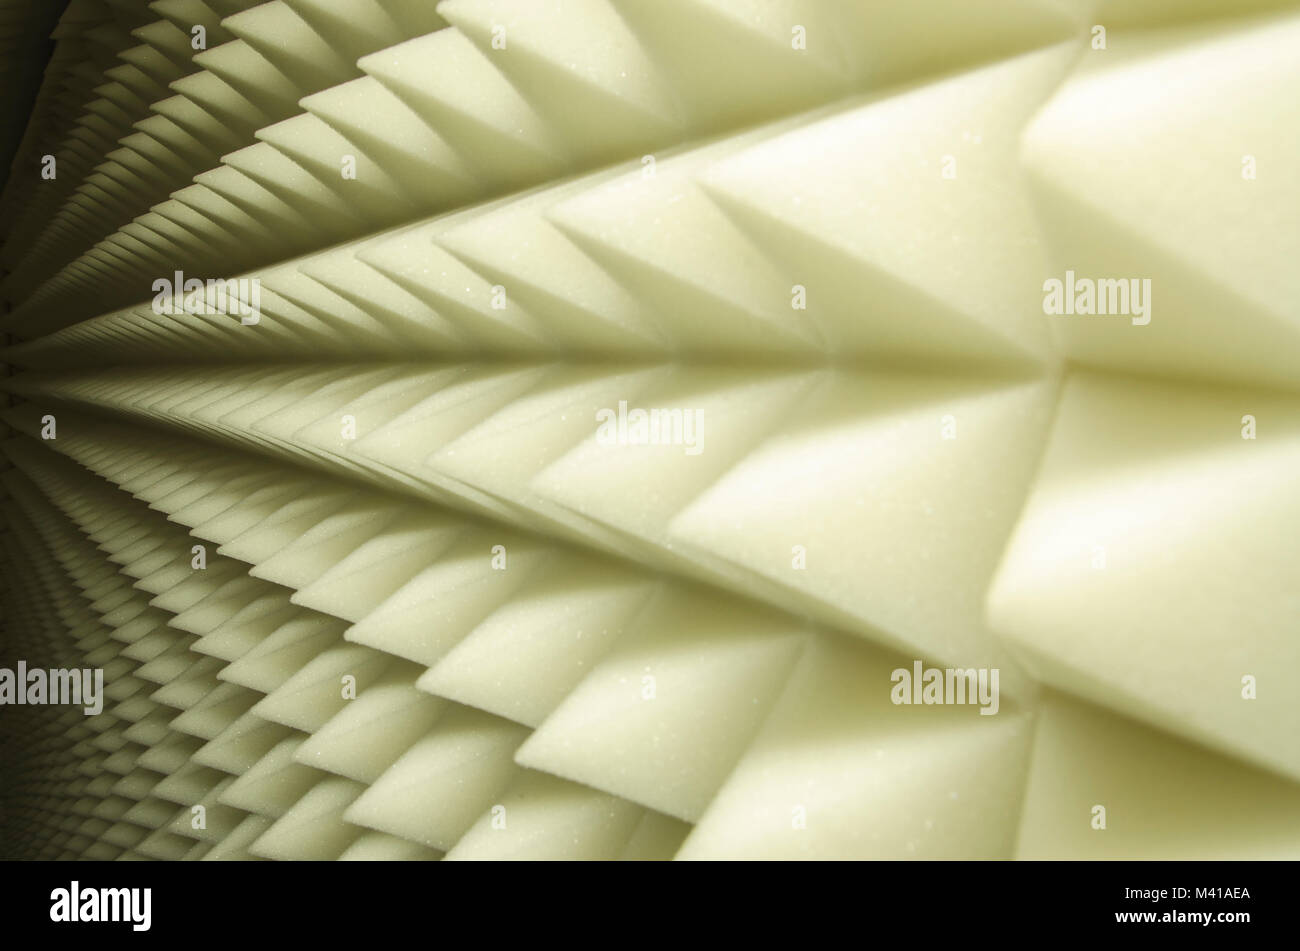 Background image of recording studio sound dampening acoustical foam Stock Photo